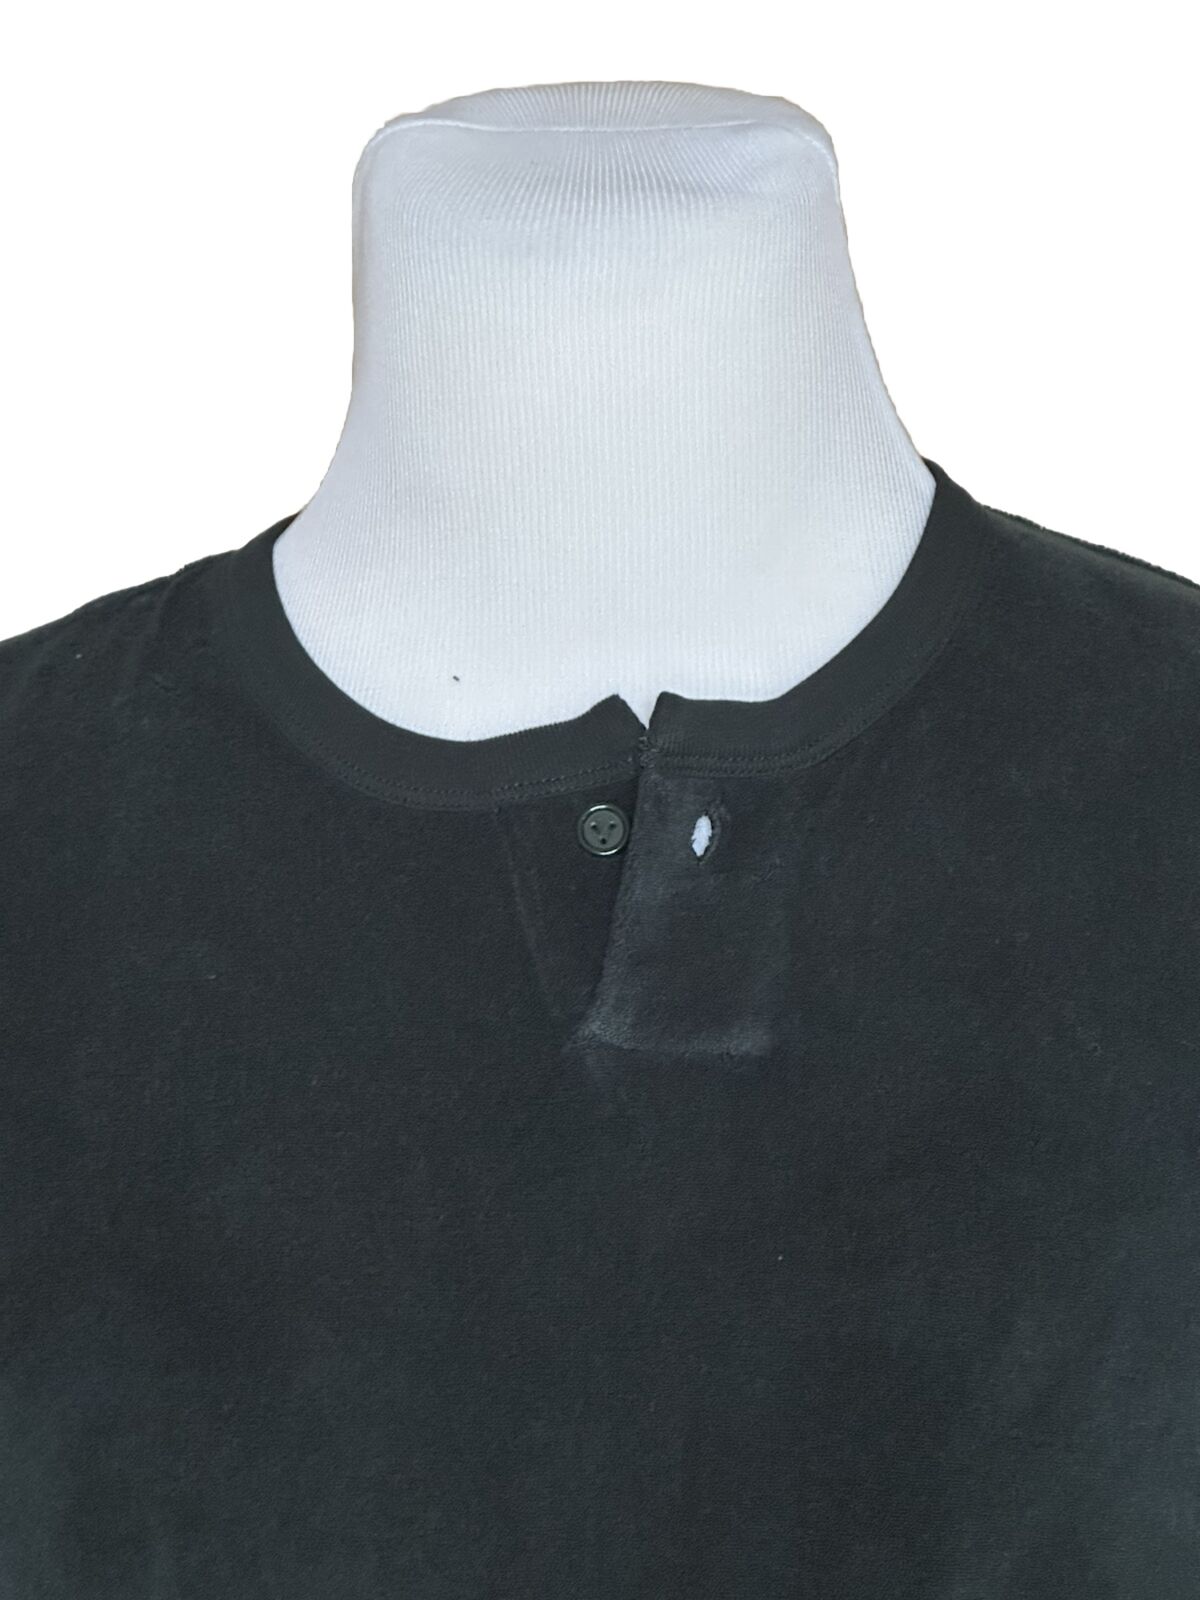 NWT $550 Bottega Veneta Men’s Toweling Jersey T-shirt Green XL Italy 656849